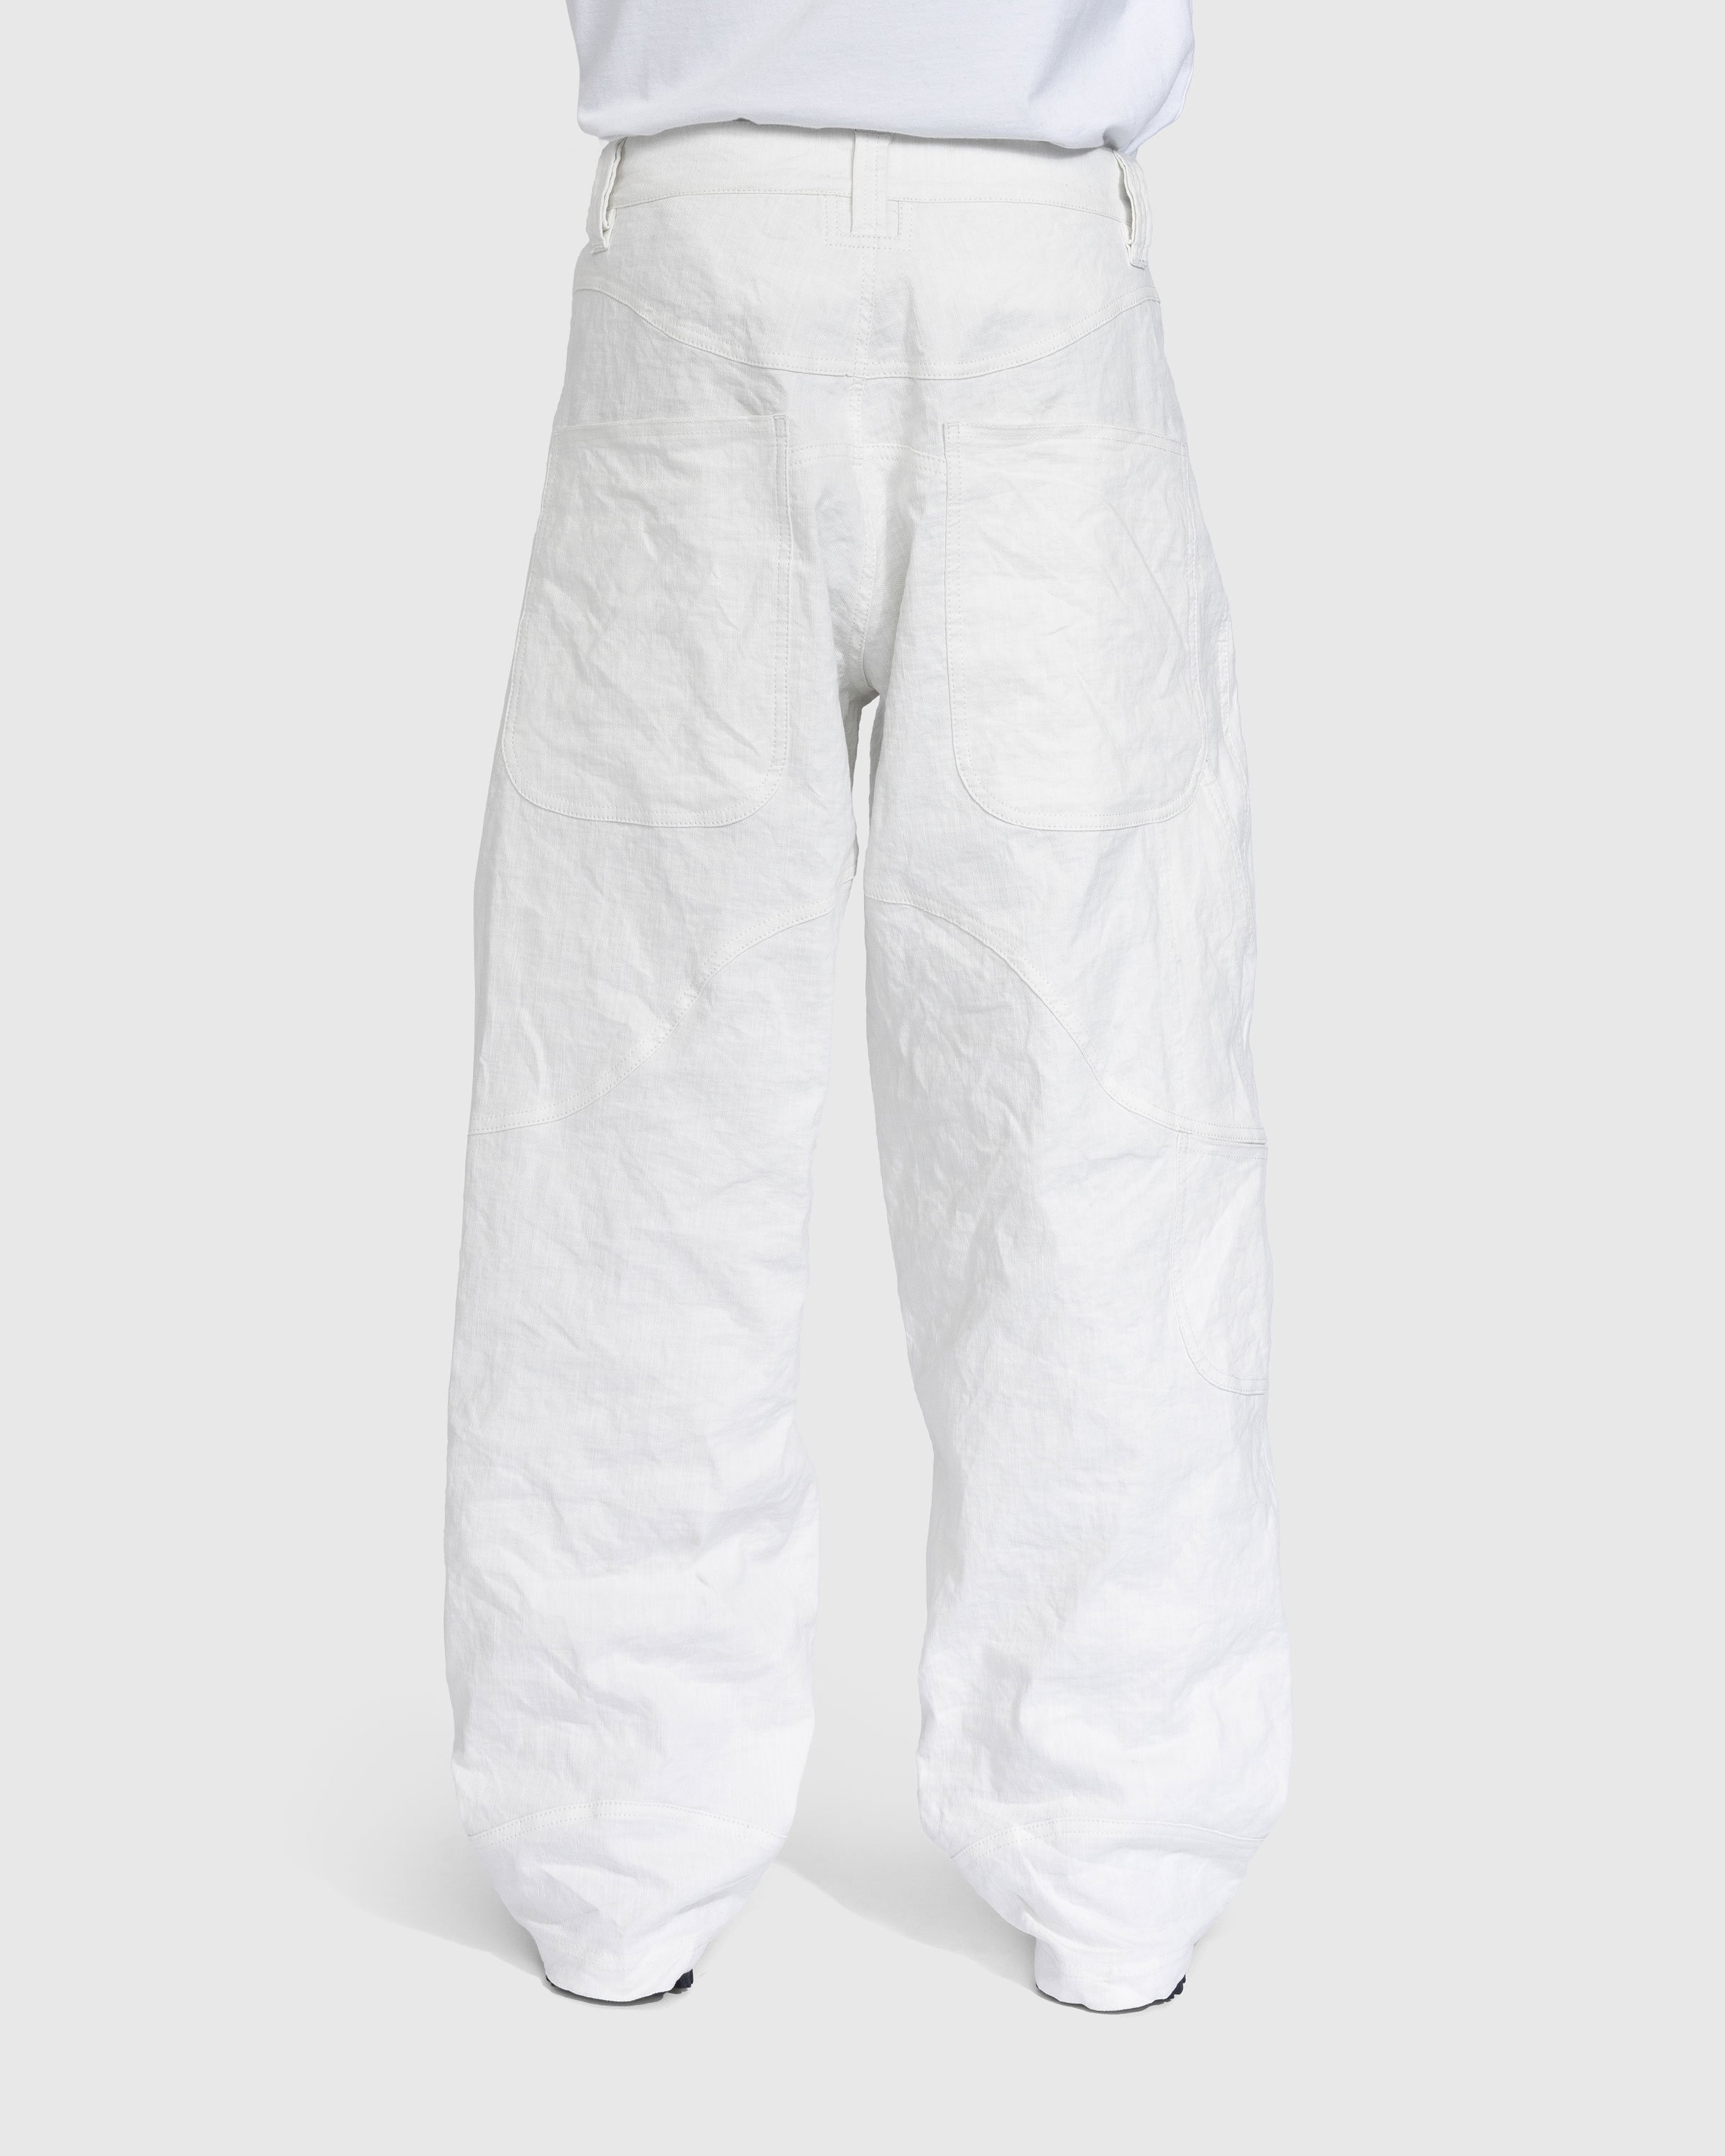 Trussardi - Wrinkled Cotton Trousers White - Clothing - White - Image 4